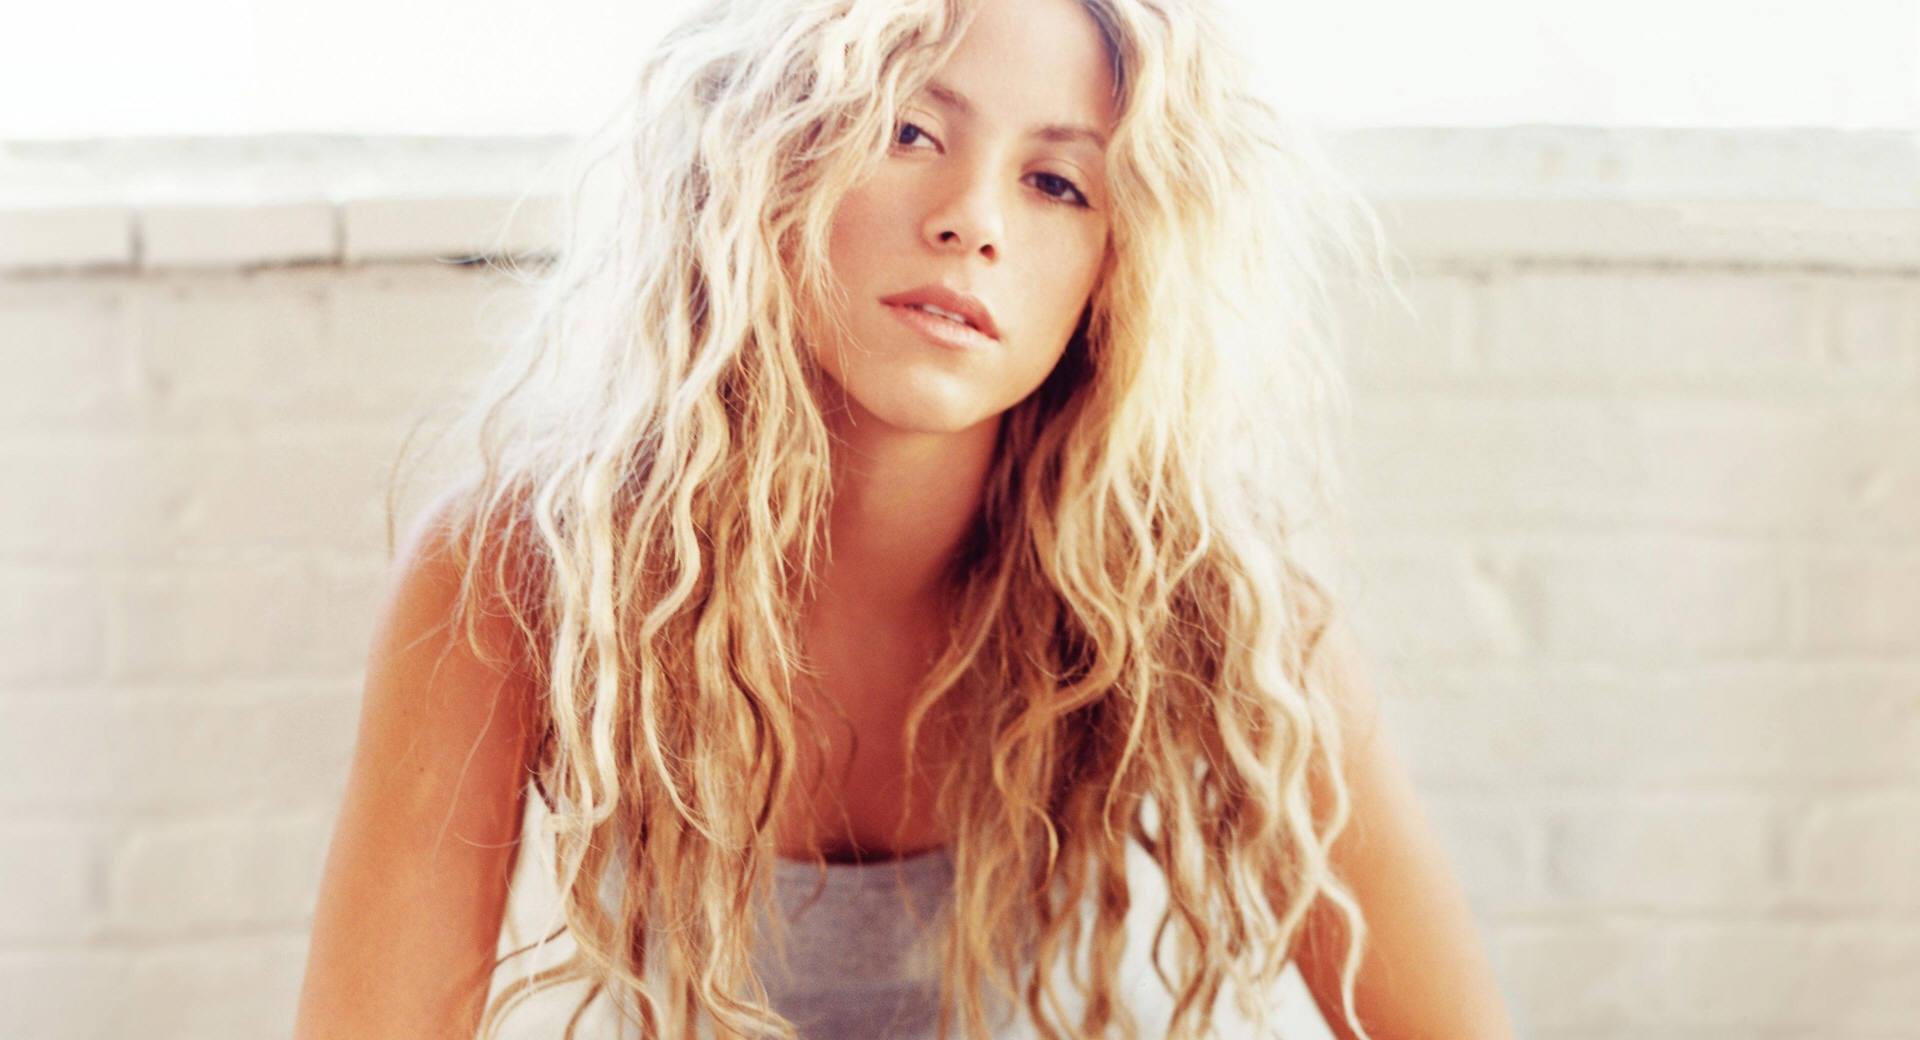 Shakira Mebarak at 640 x 960 iPhone 4 size wallpapers HD quality